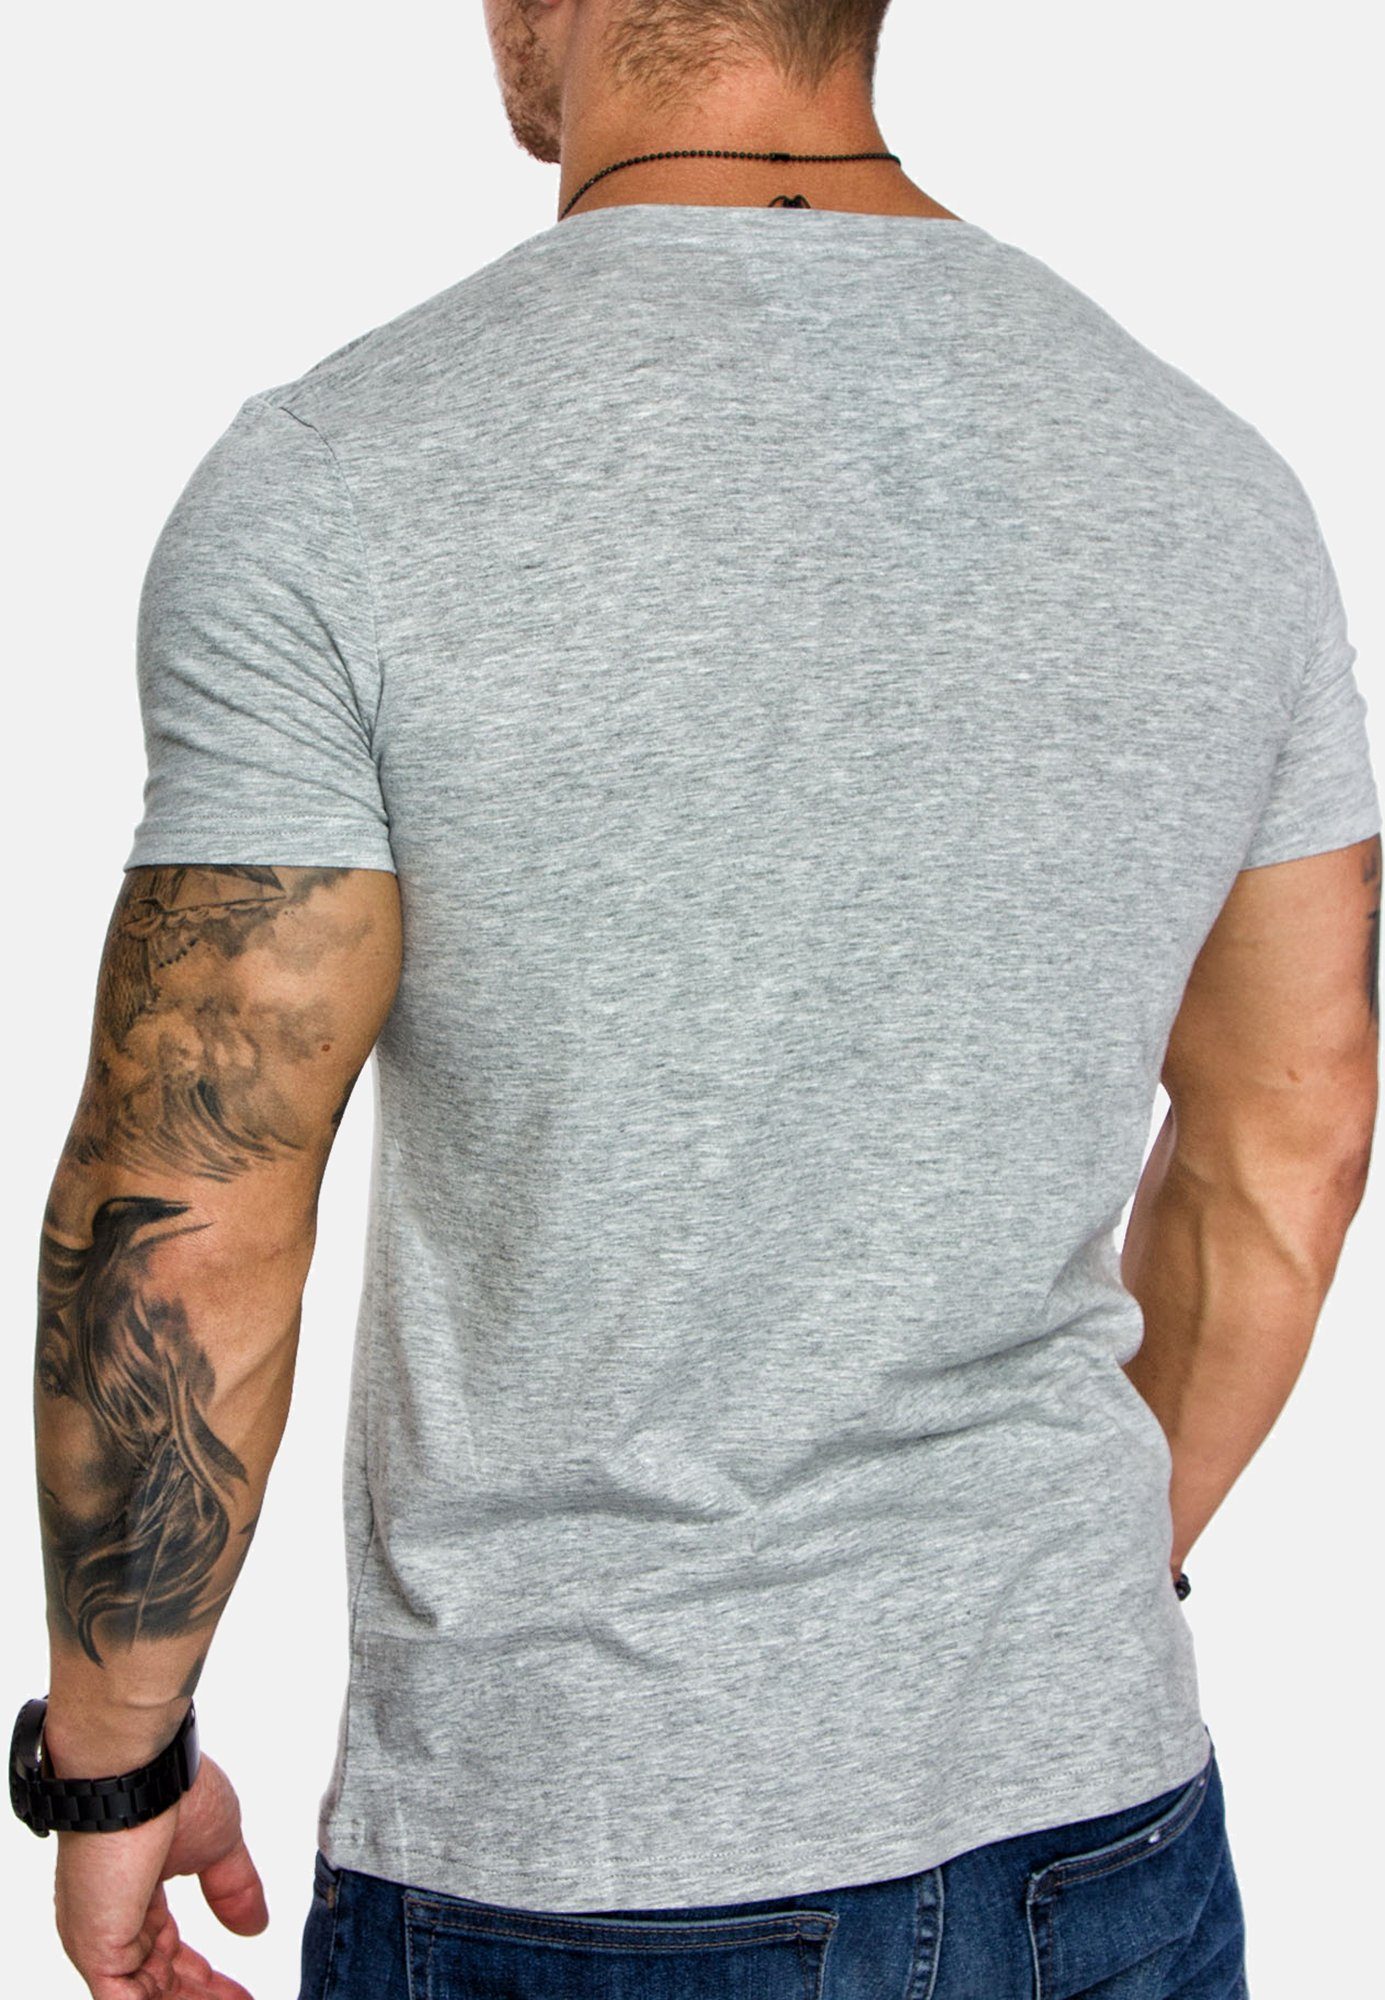 Melange Herren V-Neck T-Shirt Vintage Einfarbig V-Ausschnitt Basic Grau Basic EUGENE Shirt mit T-Shirt Amaci&Sons V-Ausschnitt